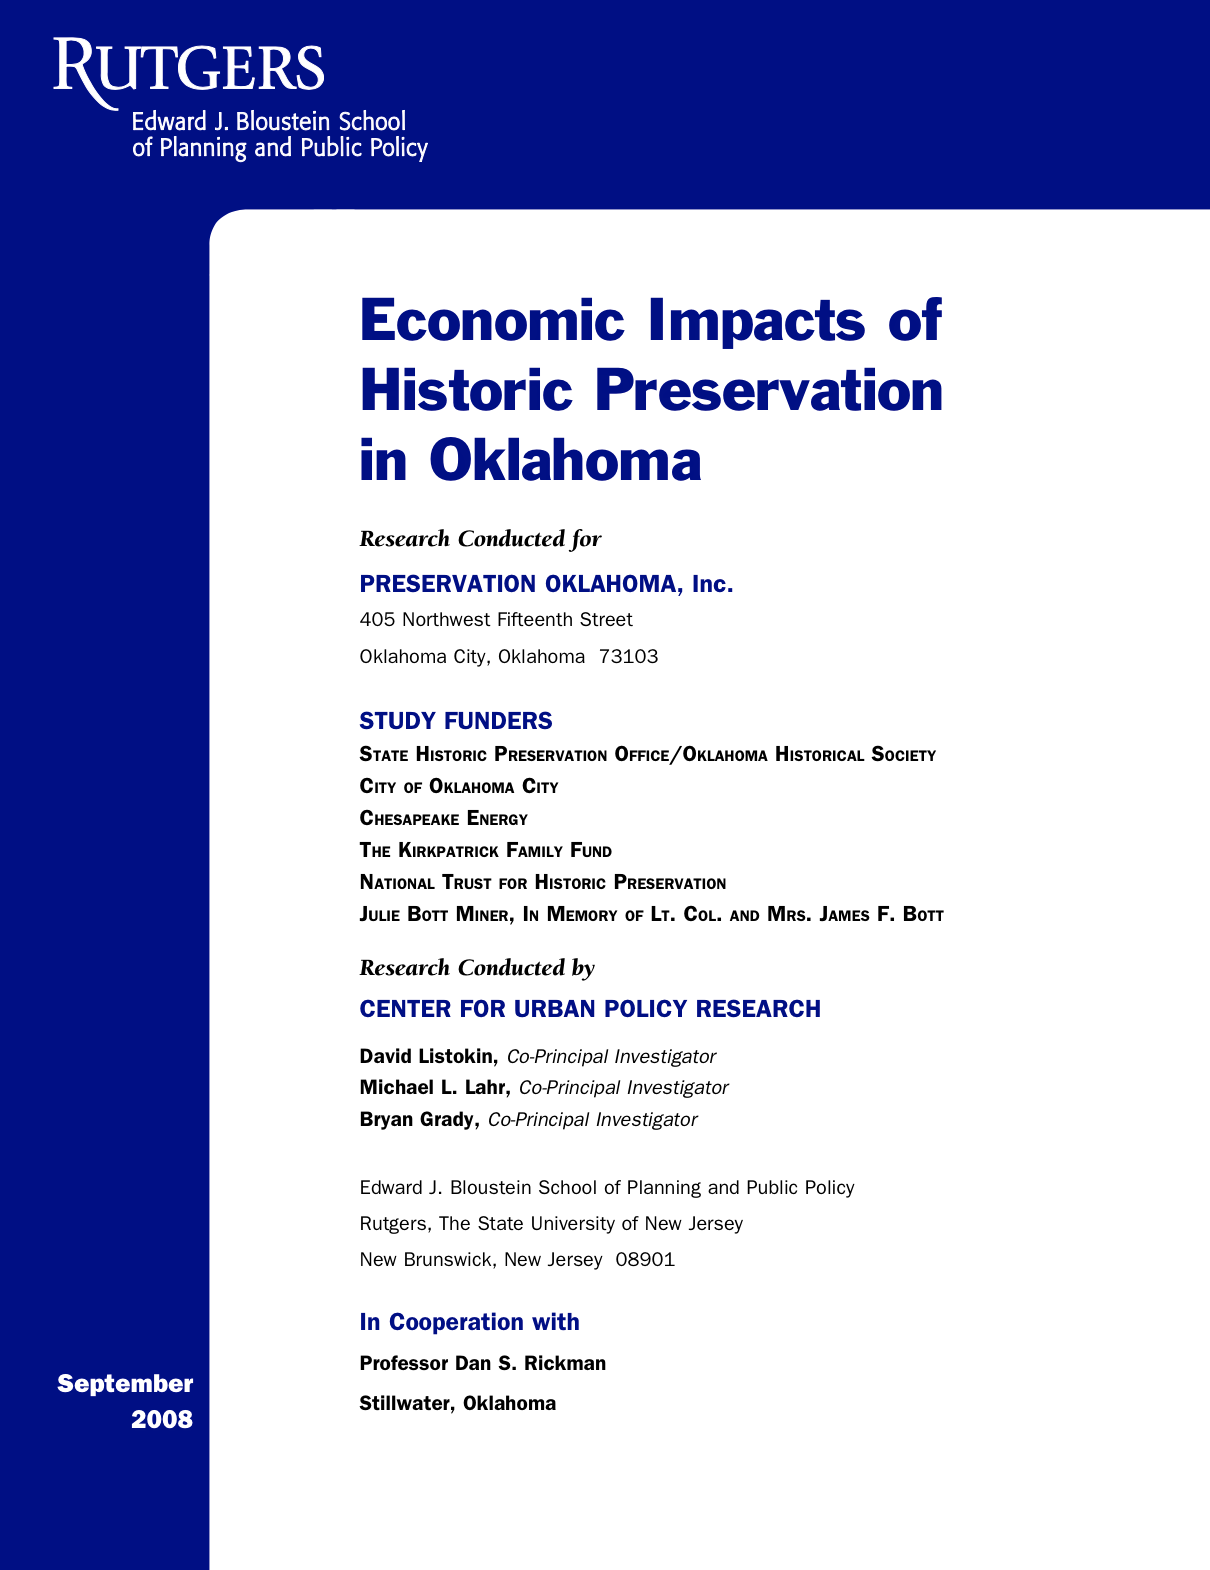 Economic Impacts of Historic Preservation in Oklahoma